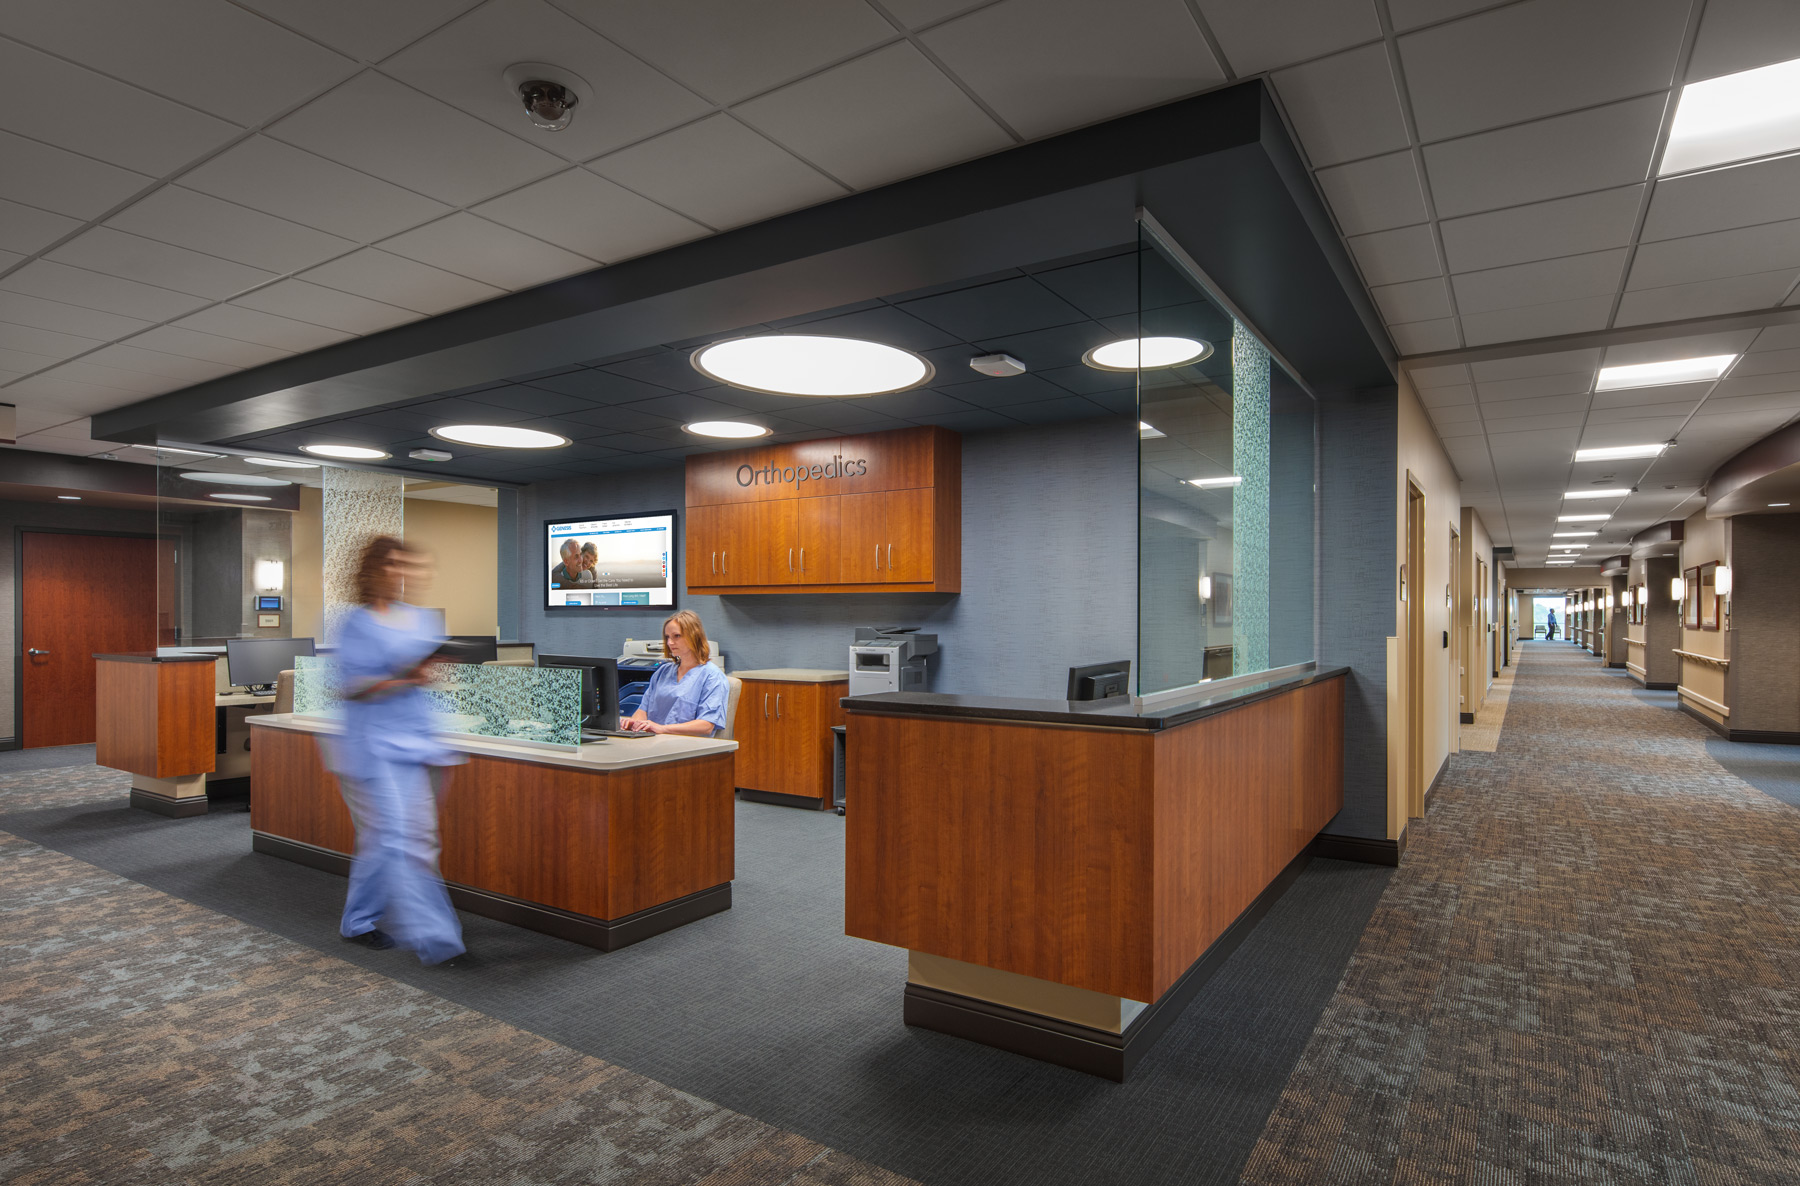 Genesis Health System - East Hospital Expansion